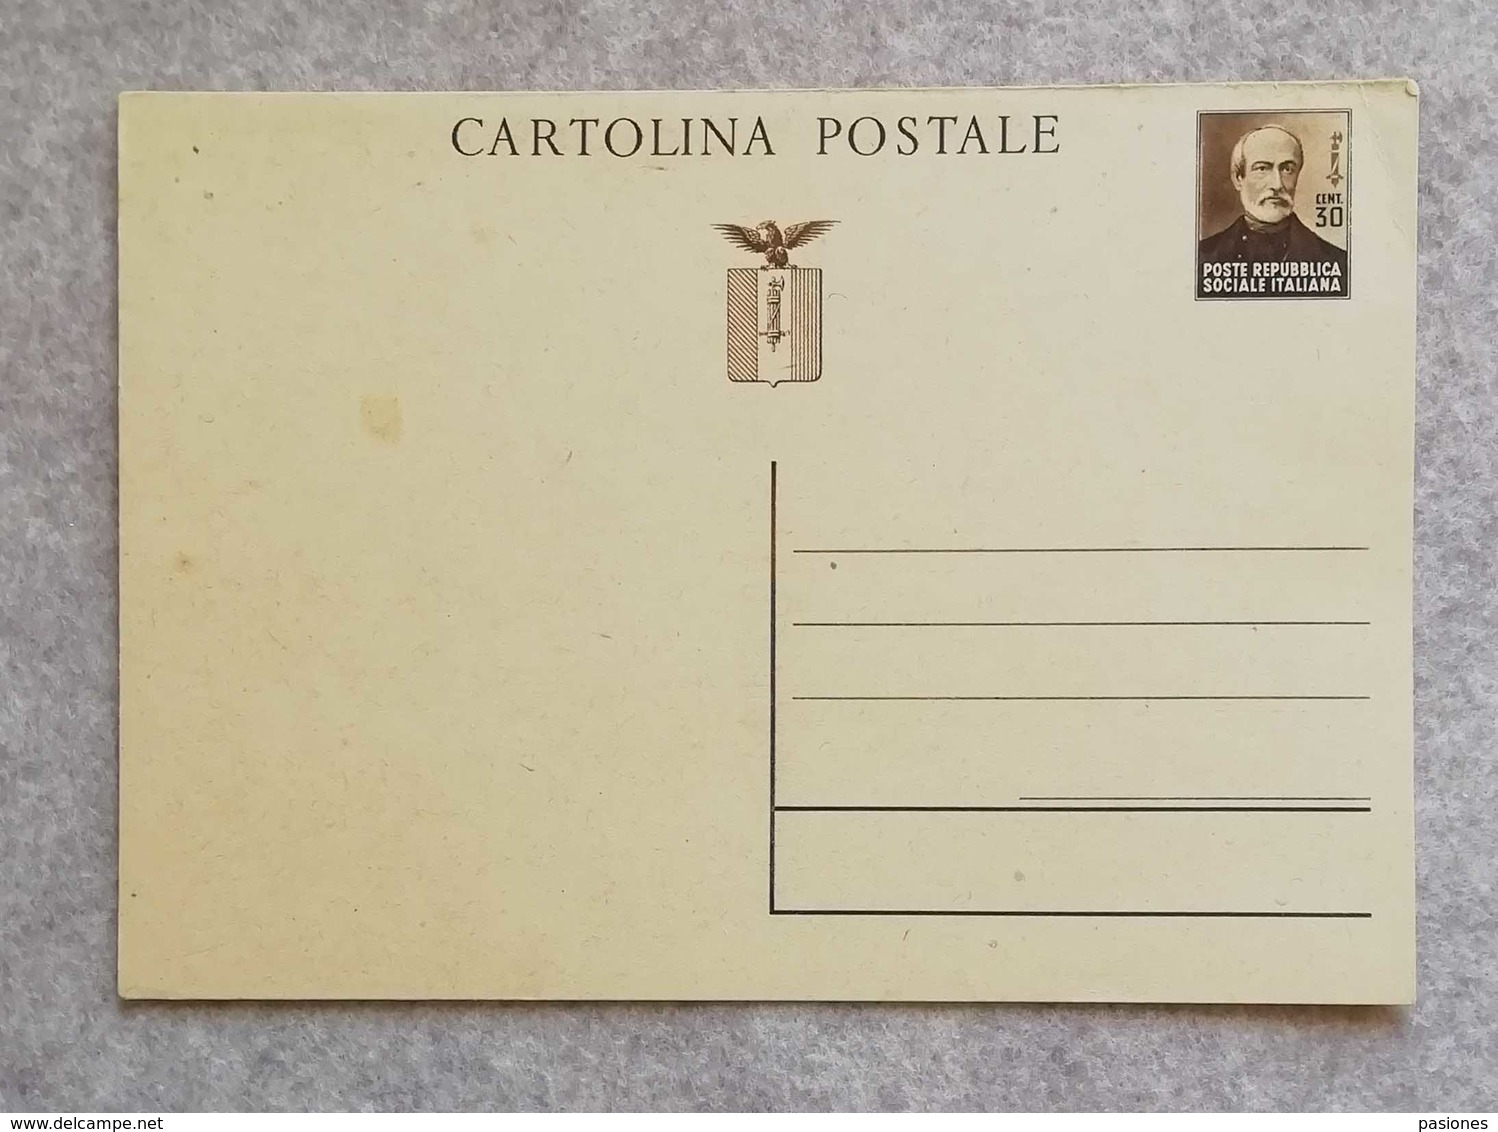 Cartolina Postale Da 30 Cent. "Giuseppe Mazzini" RSI - Non Viaggiata - Entero Postal